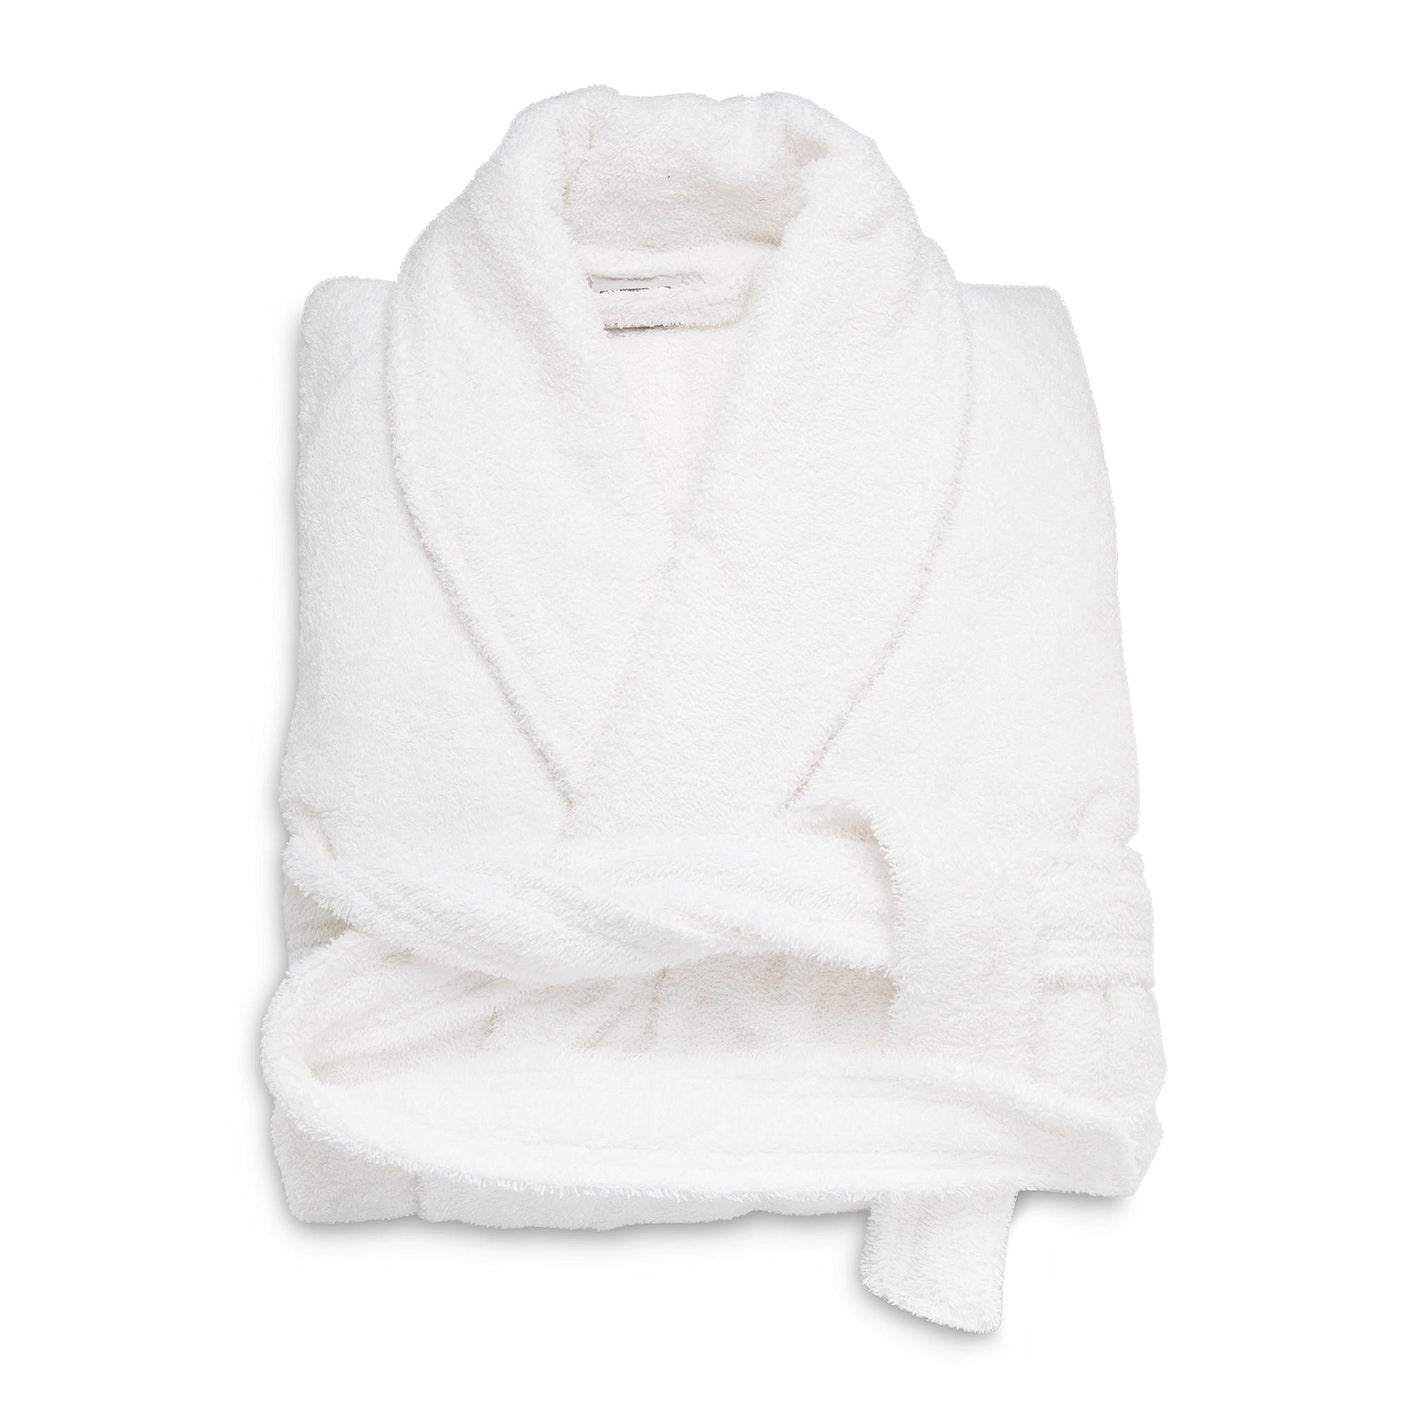 Terry towelling hotel bathrobe white